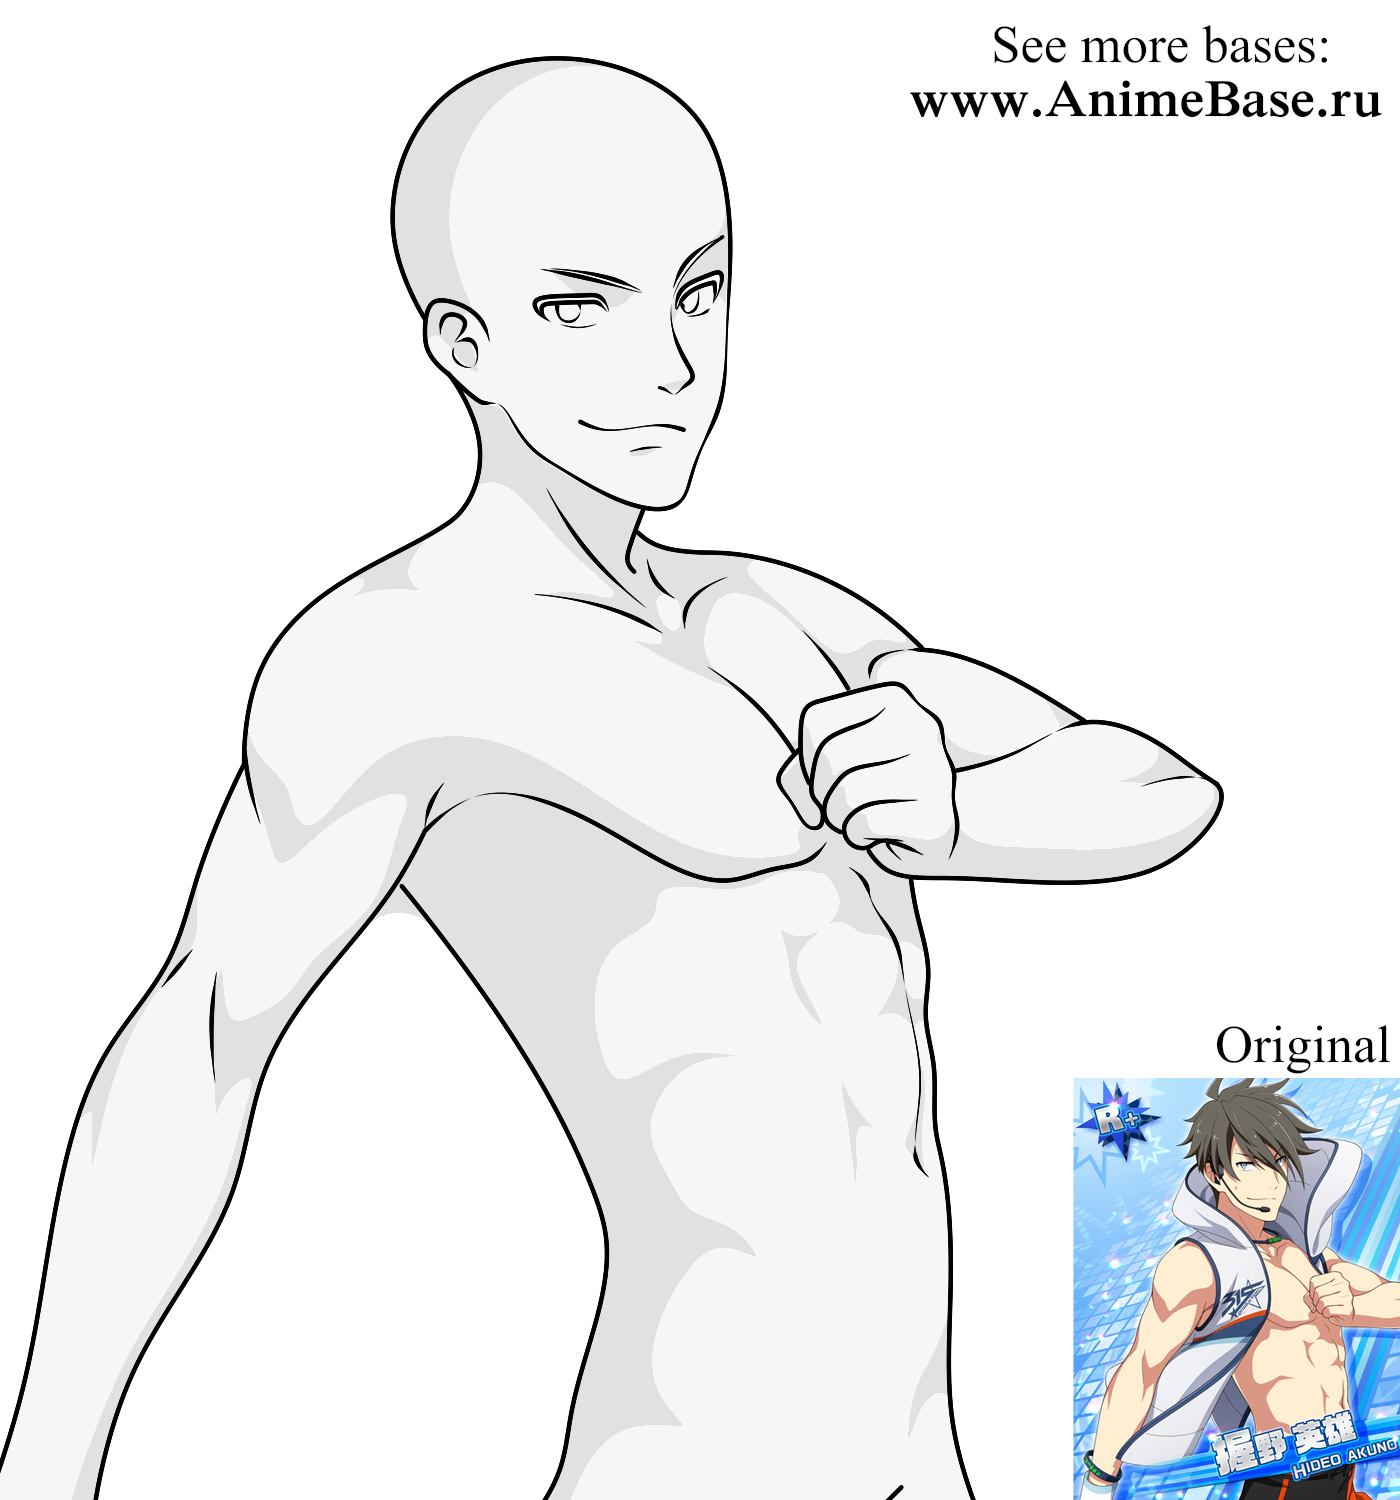 Male body abs Anime base - Anime Bases .INFO